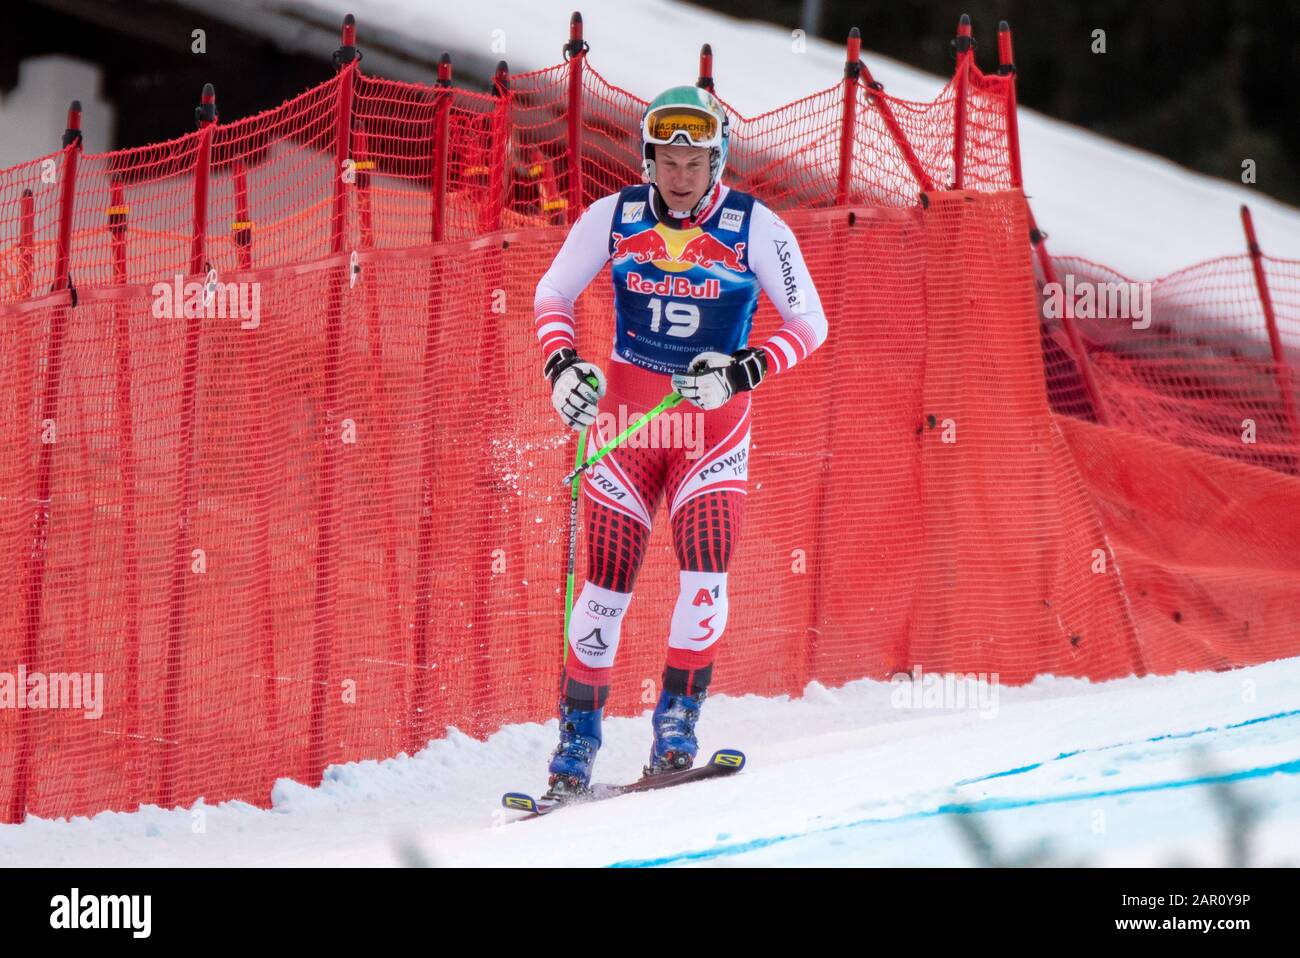 Otmar Striedinger of Austria at the Ski Alpin: 80. Hahnenkamm Race 2020 - Audi FIS Alpine Ski World Cup - Men's Downhill at the Streif on January 25, 2020 in Kitzbuehel, AUSTRIA. Credit: European Sports Photographic Agency/Alamy Live News Stock Photo